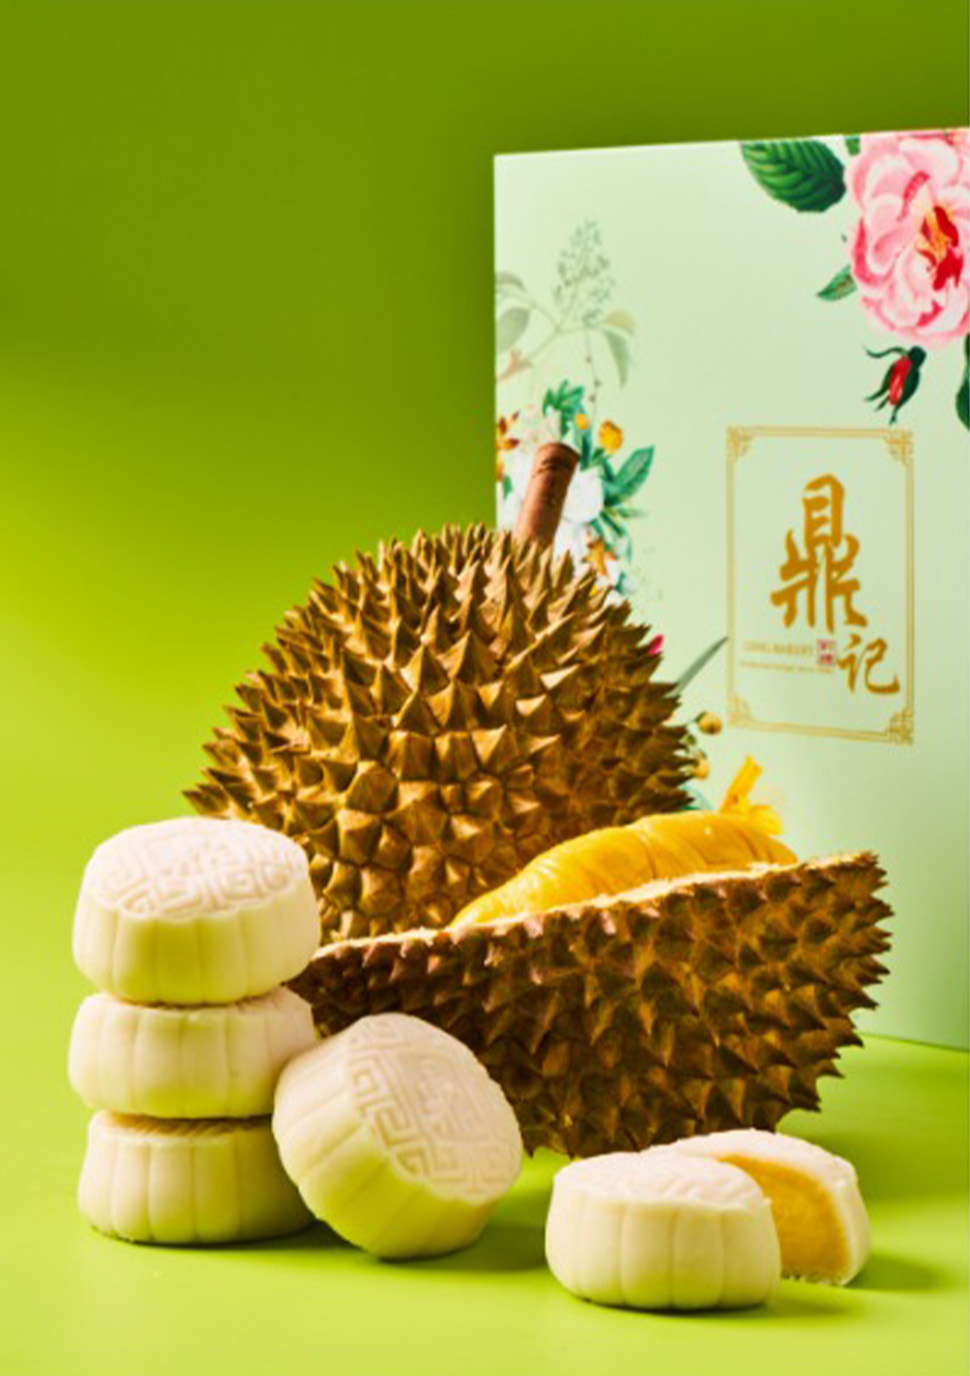 ding bakery best durian mooncake